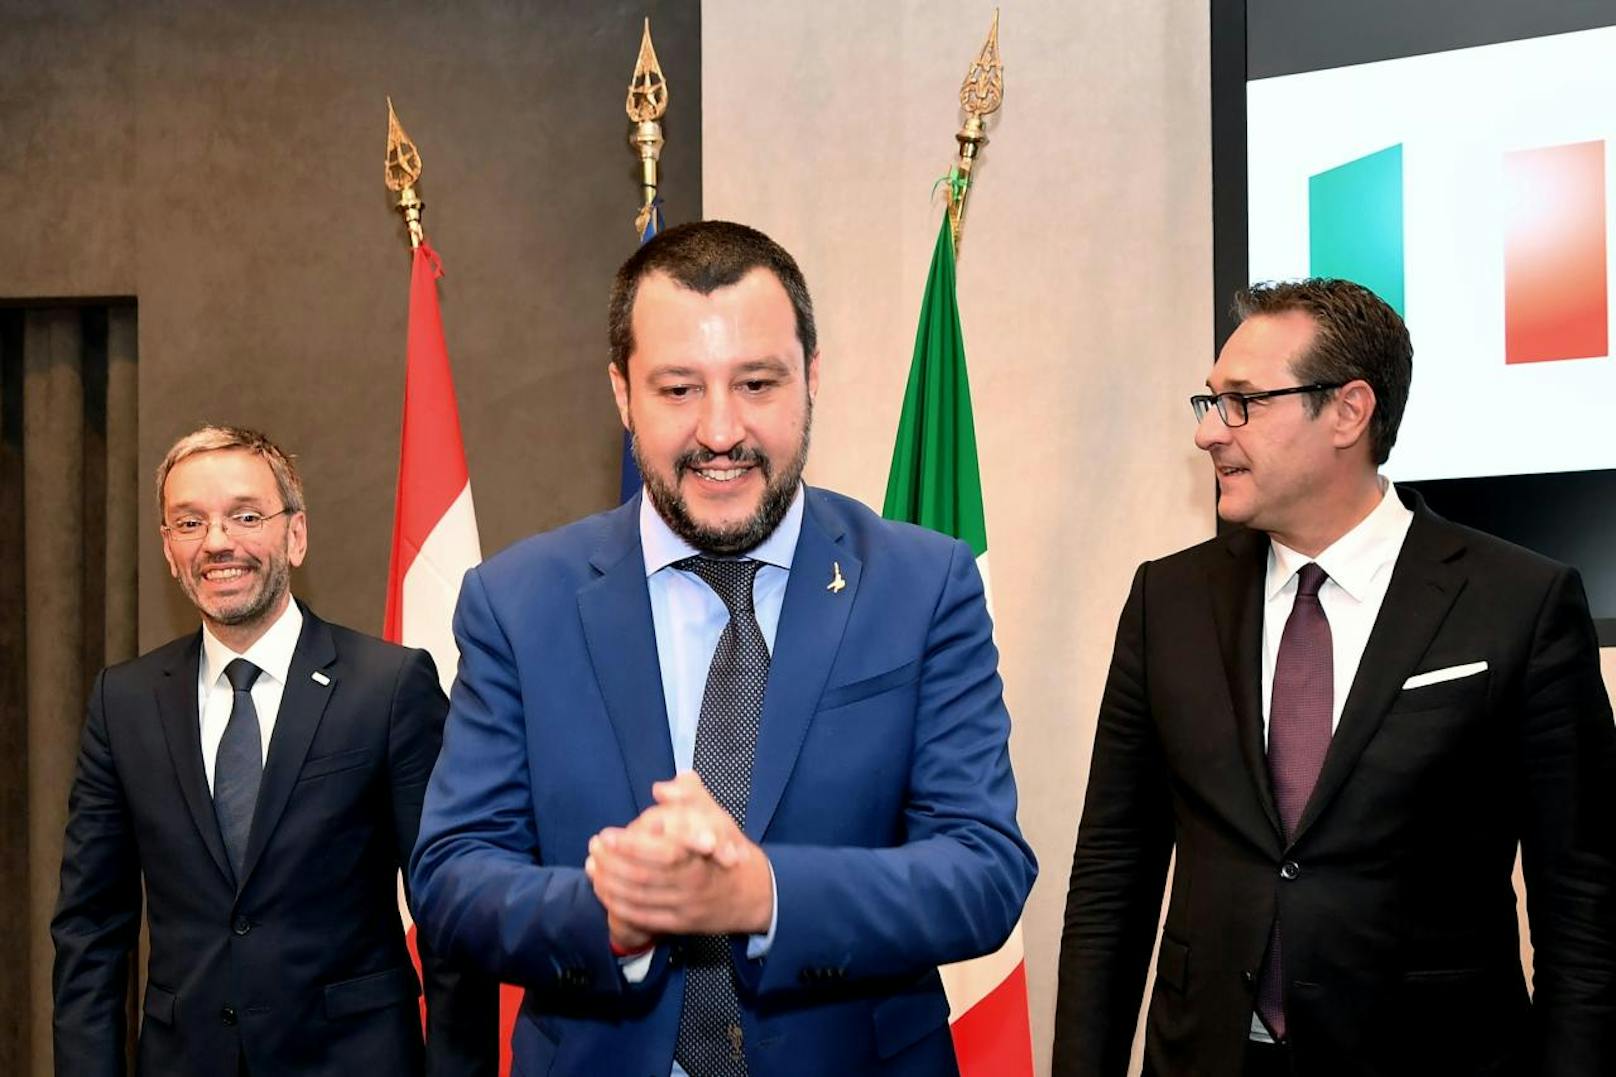 Herbert Kickl, Matteo Salvini und Heinz-Christian Strache